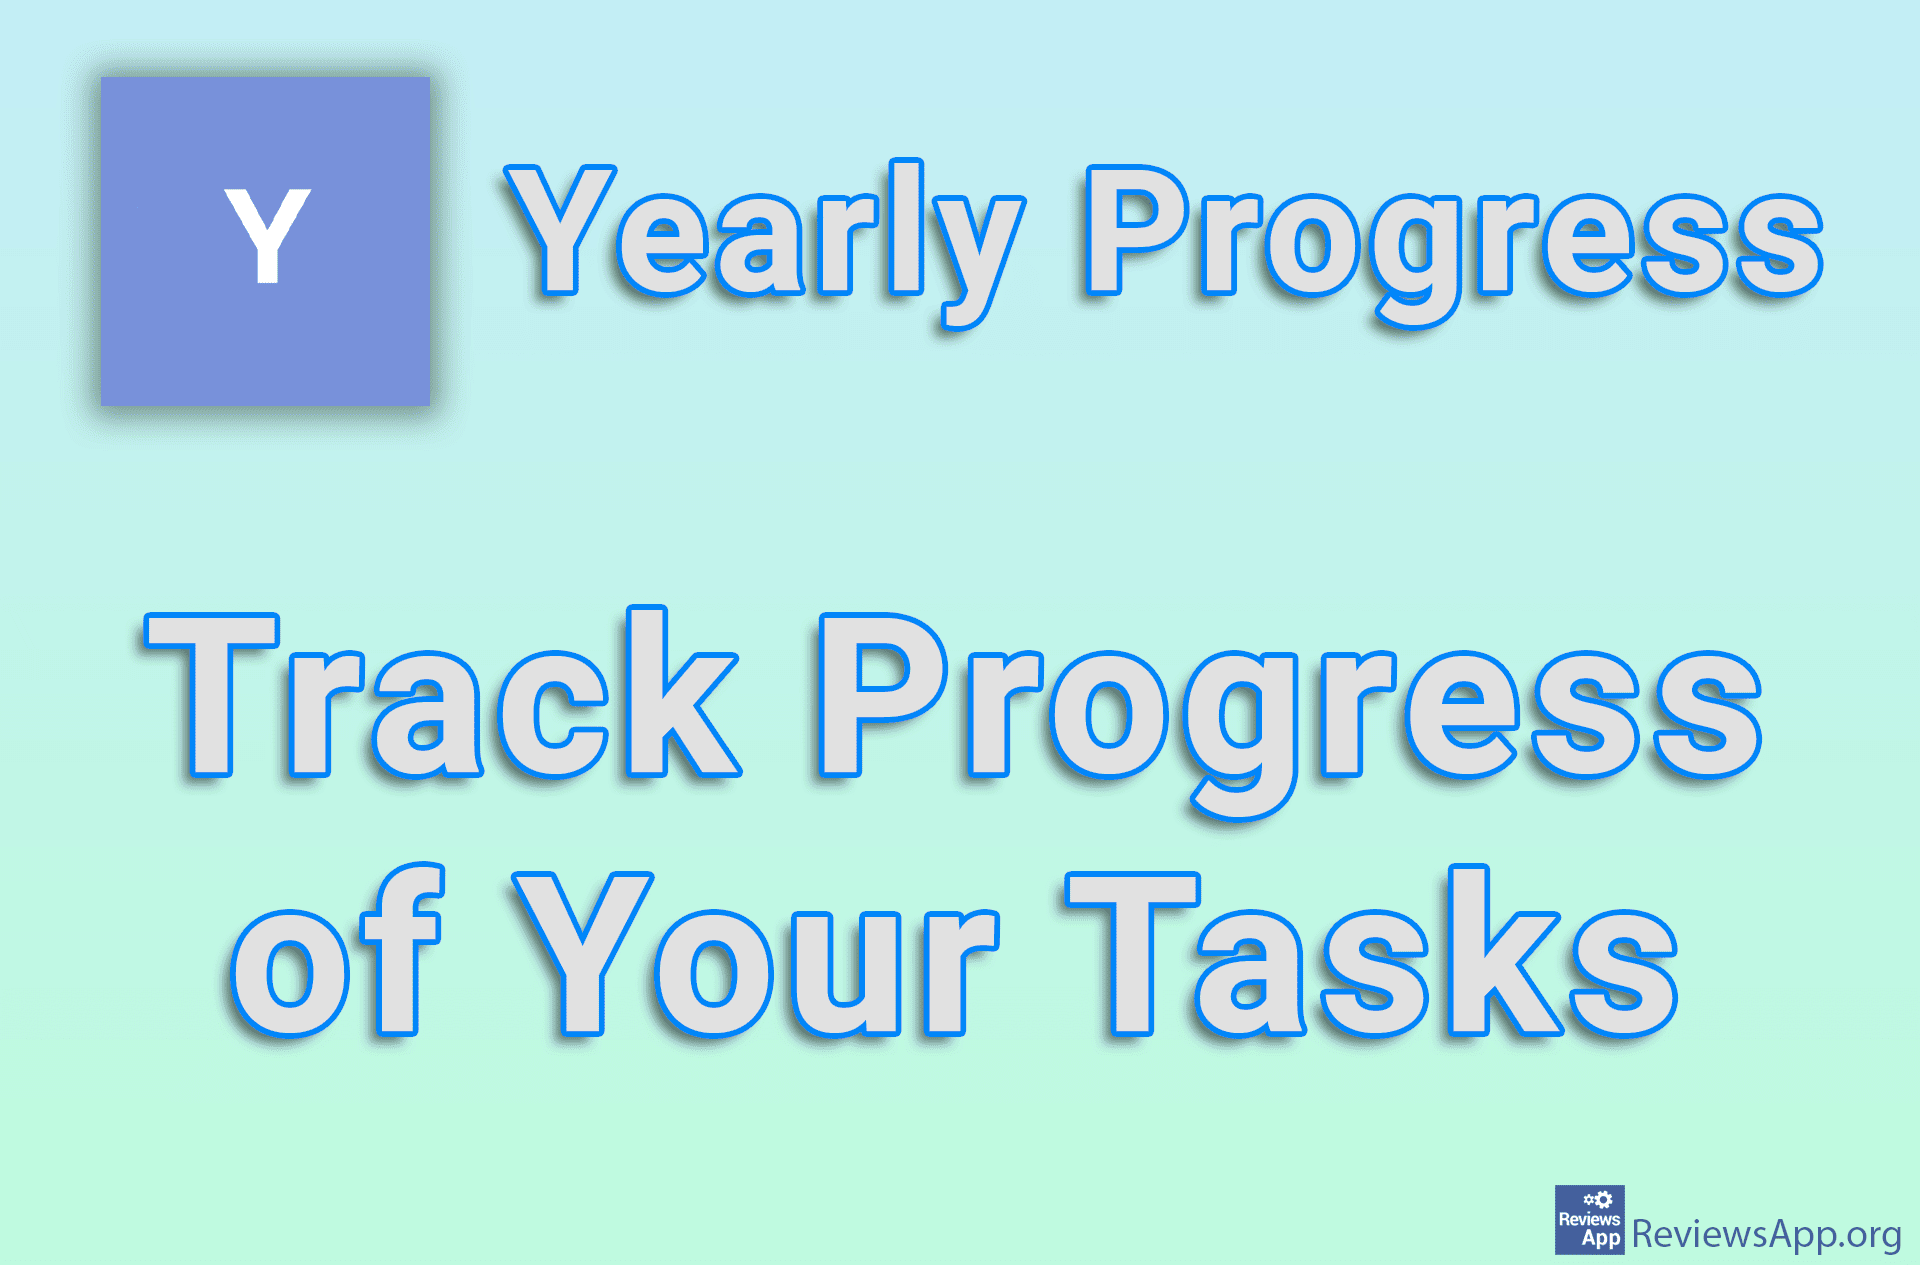 Yearly Progress – Track Progress of Your Tasks